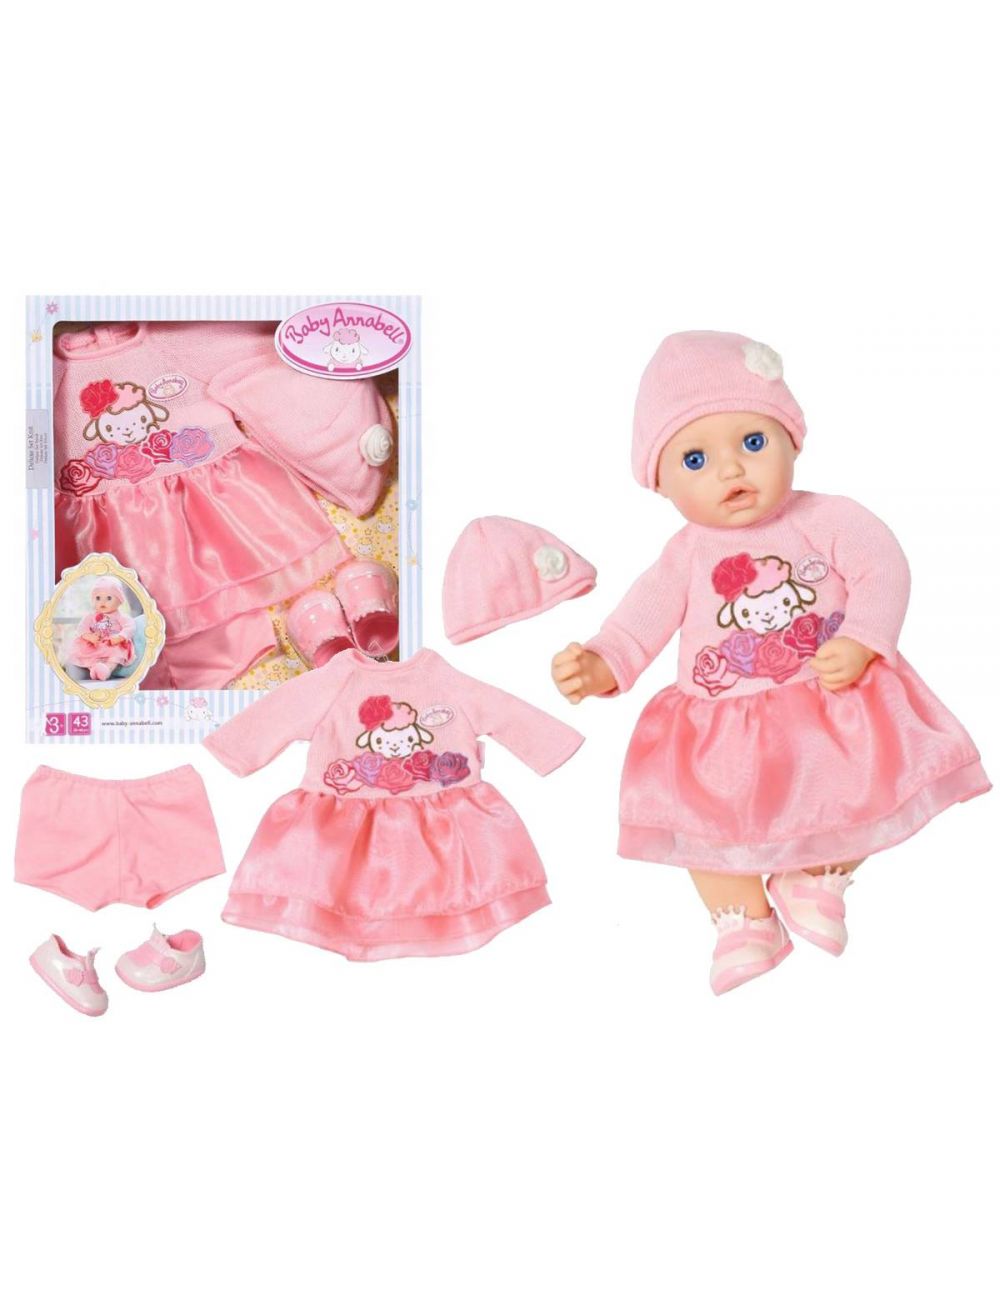 BABY Annabell Dzianinowy zestaw ubranek dla lalki 701966